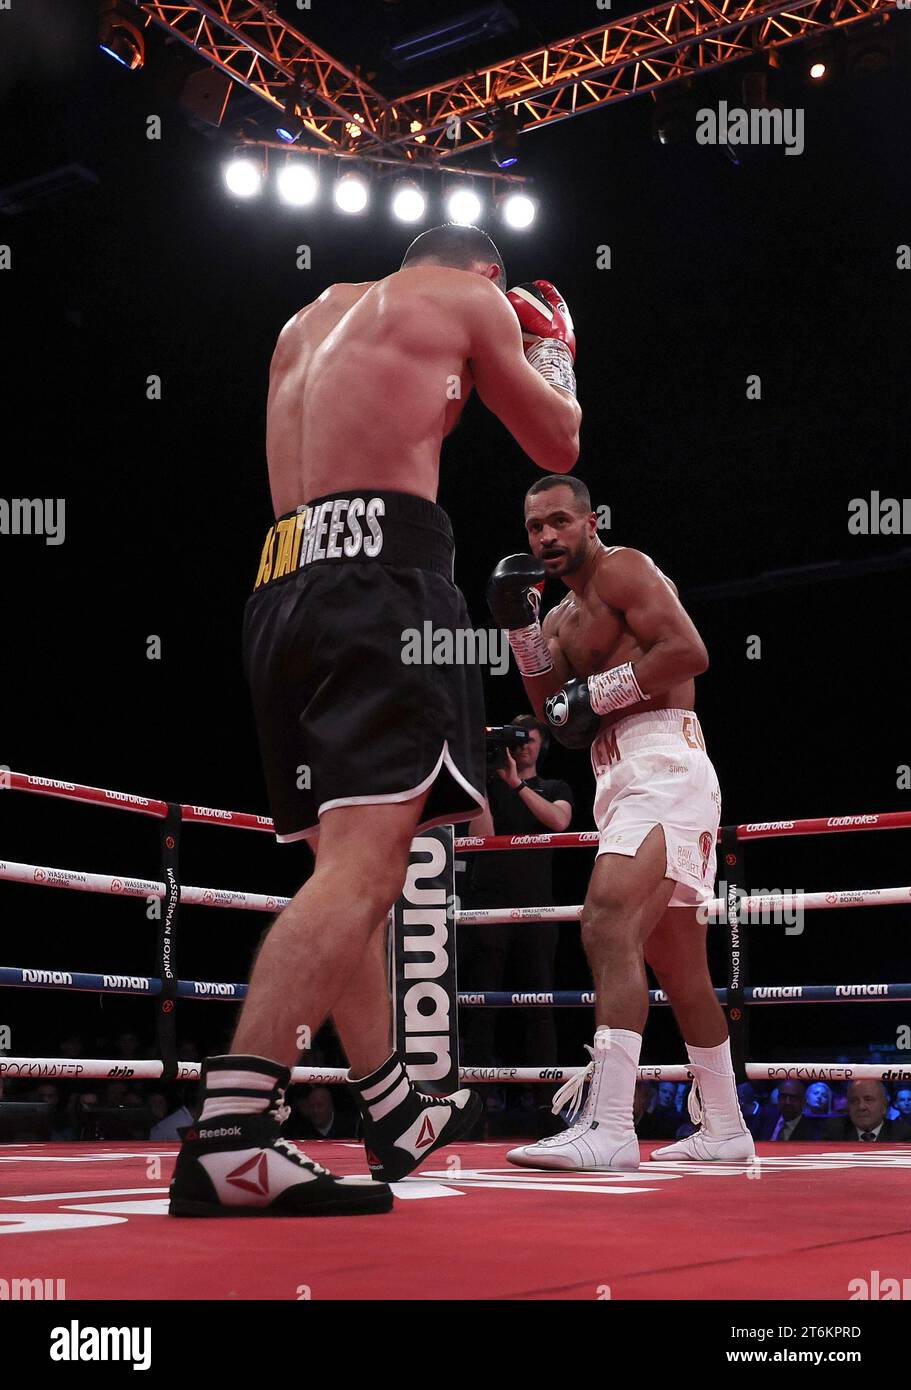 Who won the boxing last night? Harlem Eubank vs. Timo Schwarzkopf